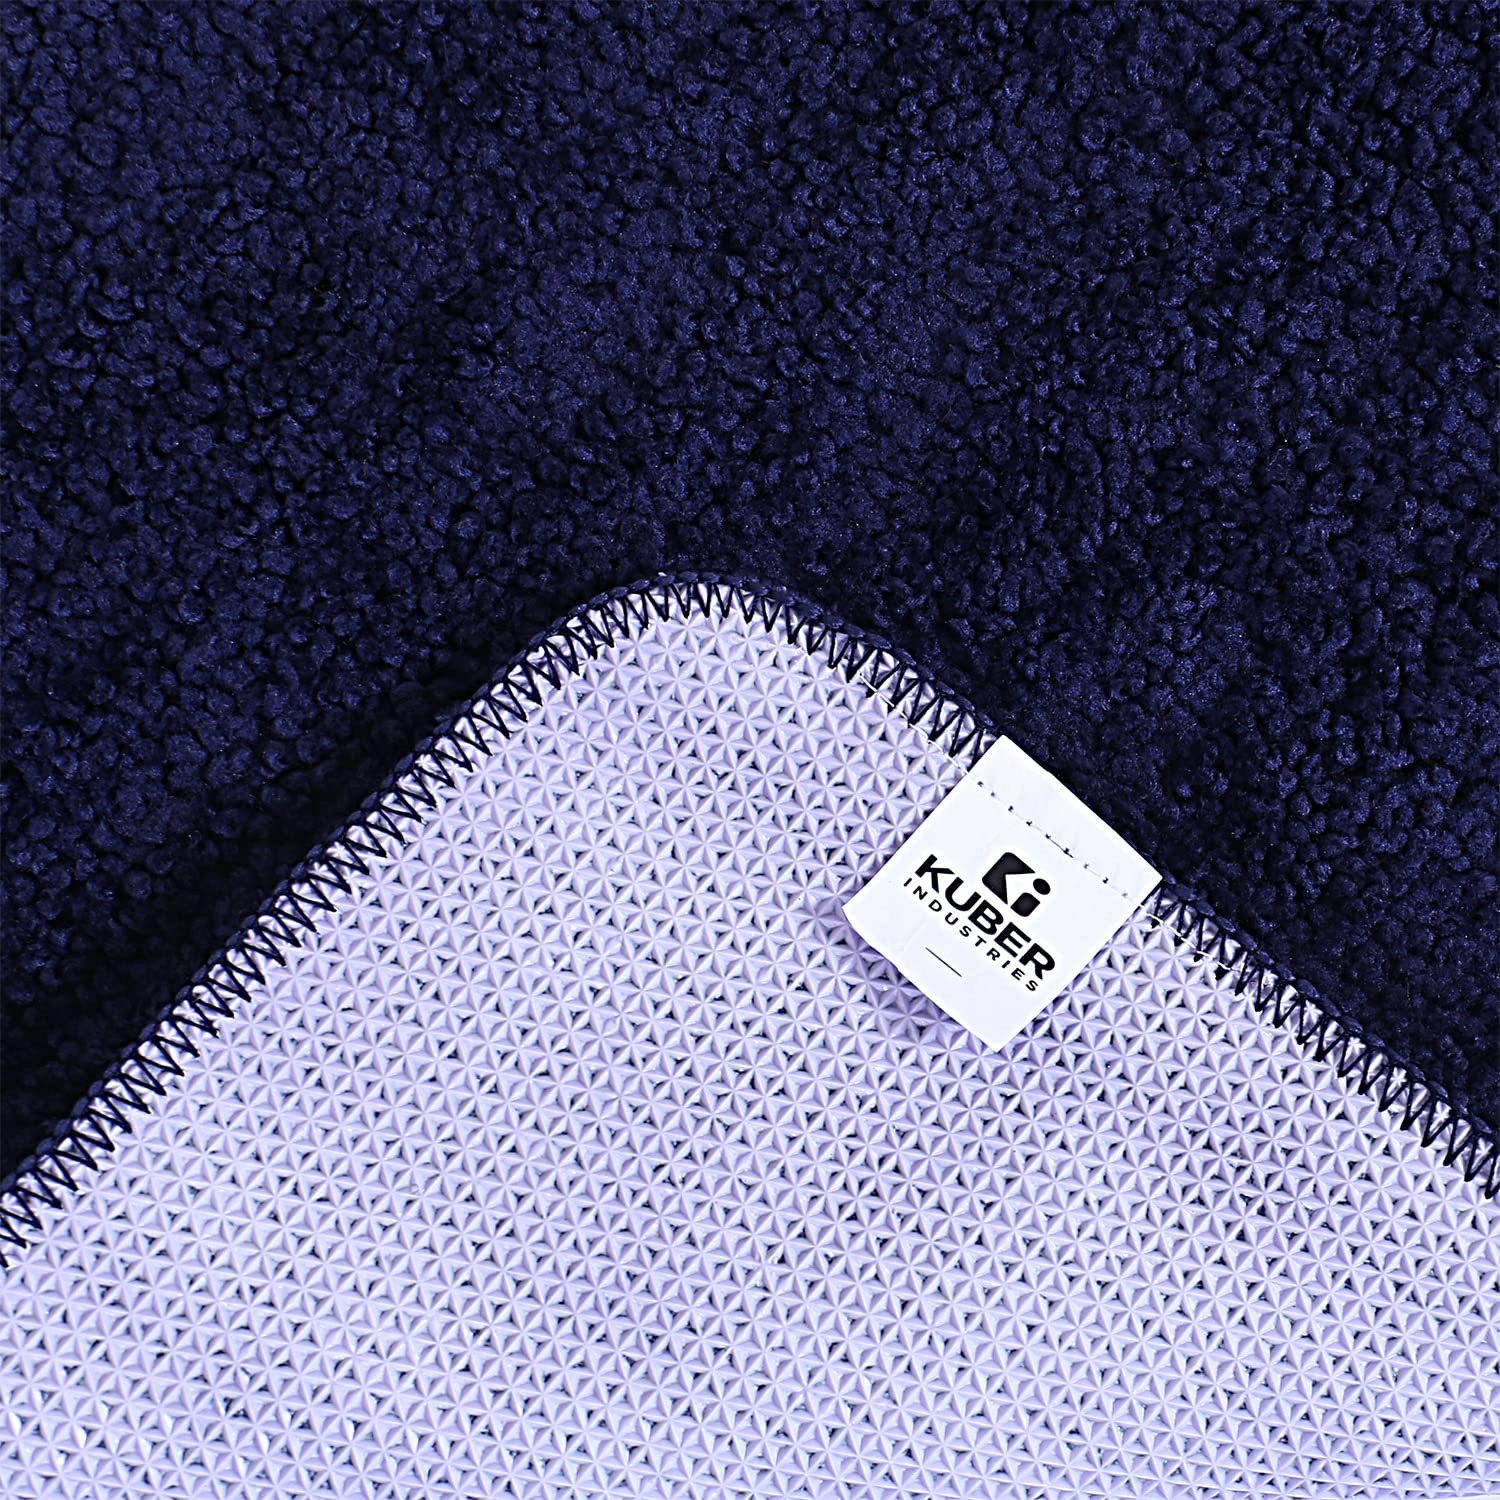 Kuber Industries Microfiber Doormats|Water Absorbant|Soaking Fluffy Velvet Floor mat|Entrance Mat for Kitchen,Bedside,Door,Living,Prayer Room,60x40 cm,Pack of 2 (Blue & Black)